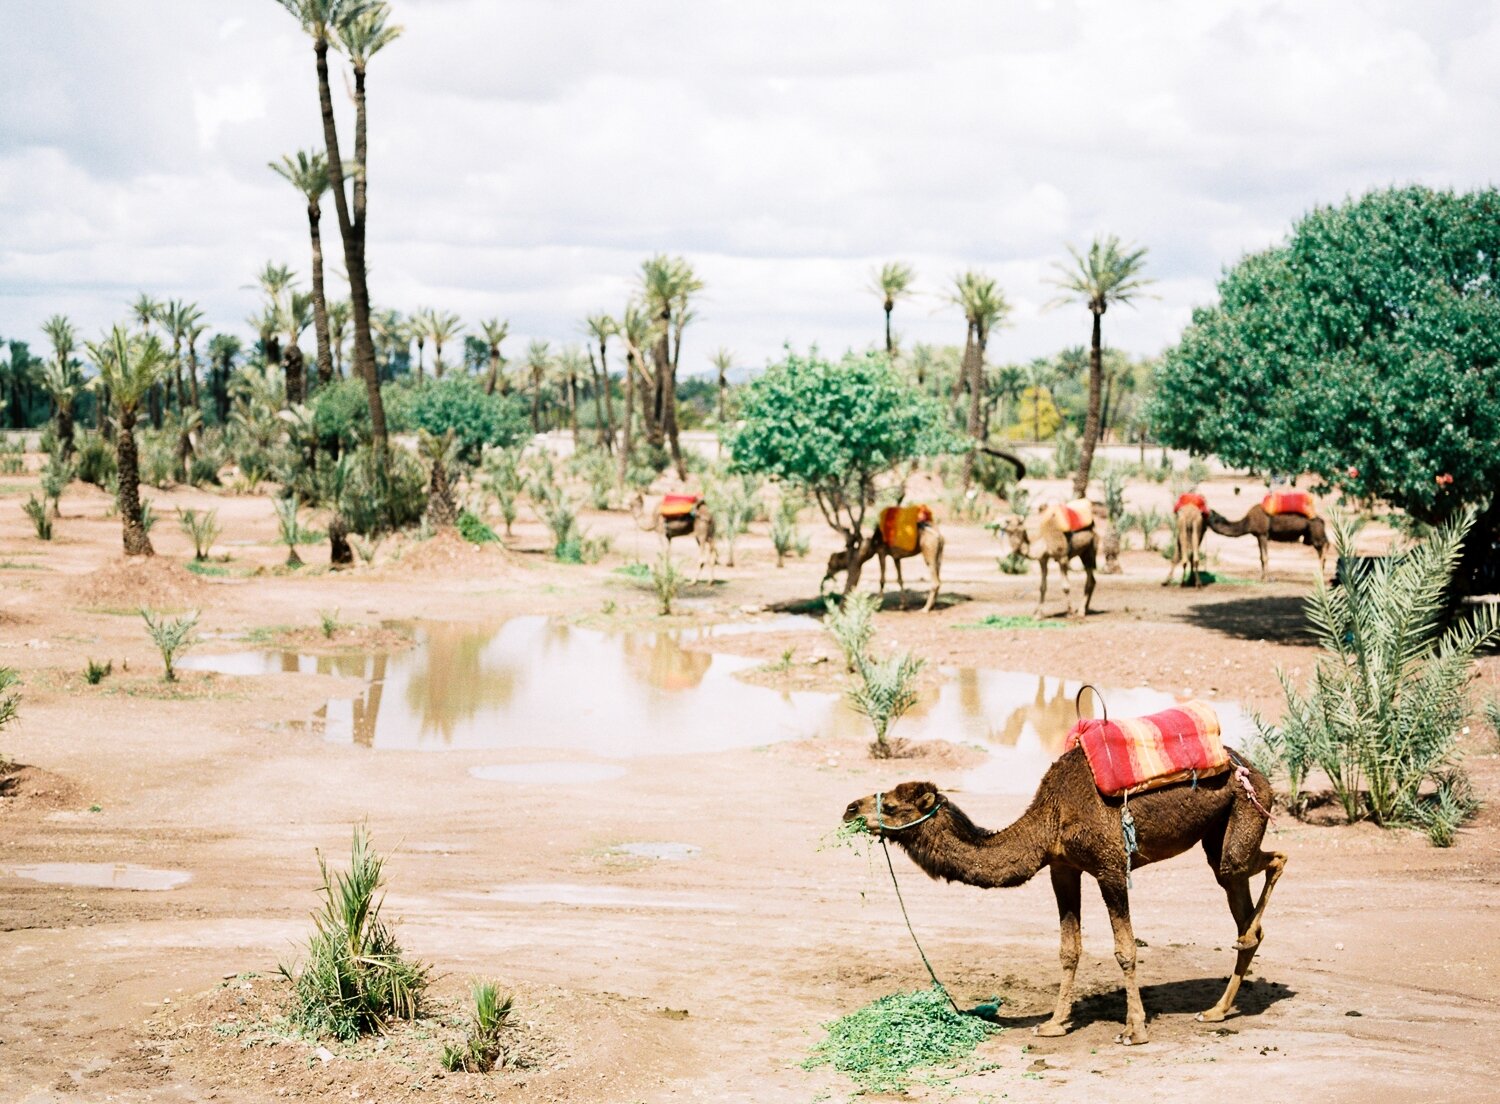 travel-dessert-africa-camel-morocco-holiday-lifestyle-palmtree-marrakech_t20_eojjRb.jpg